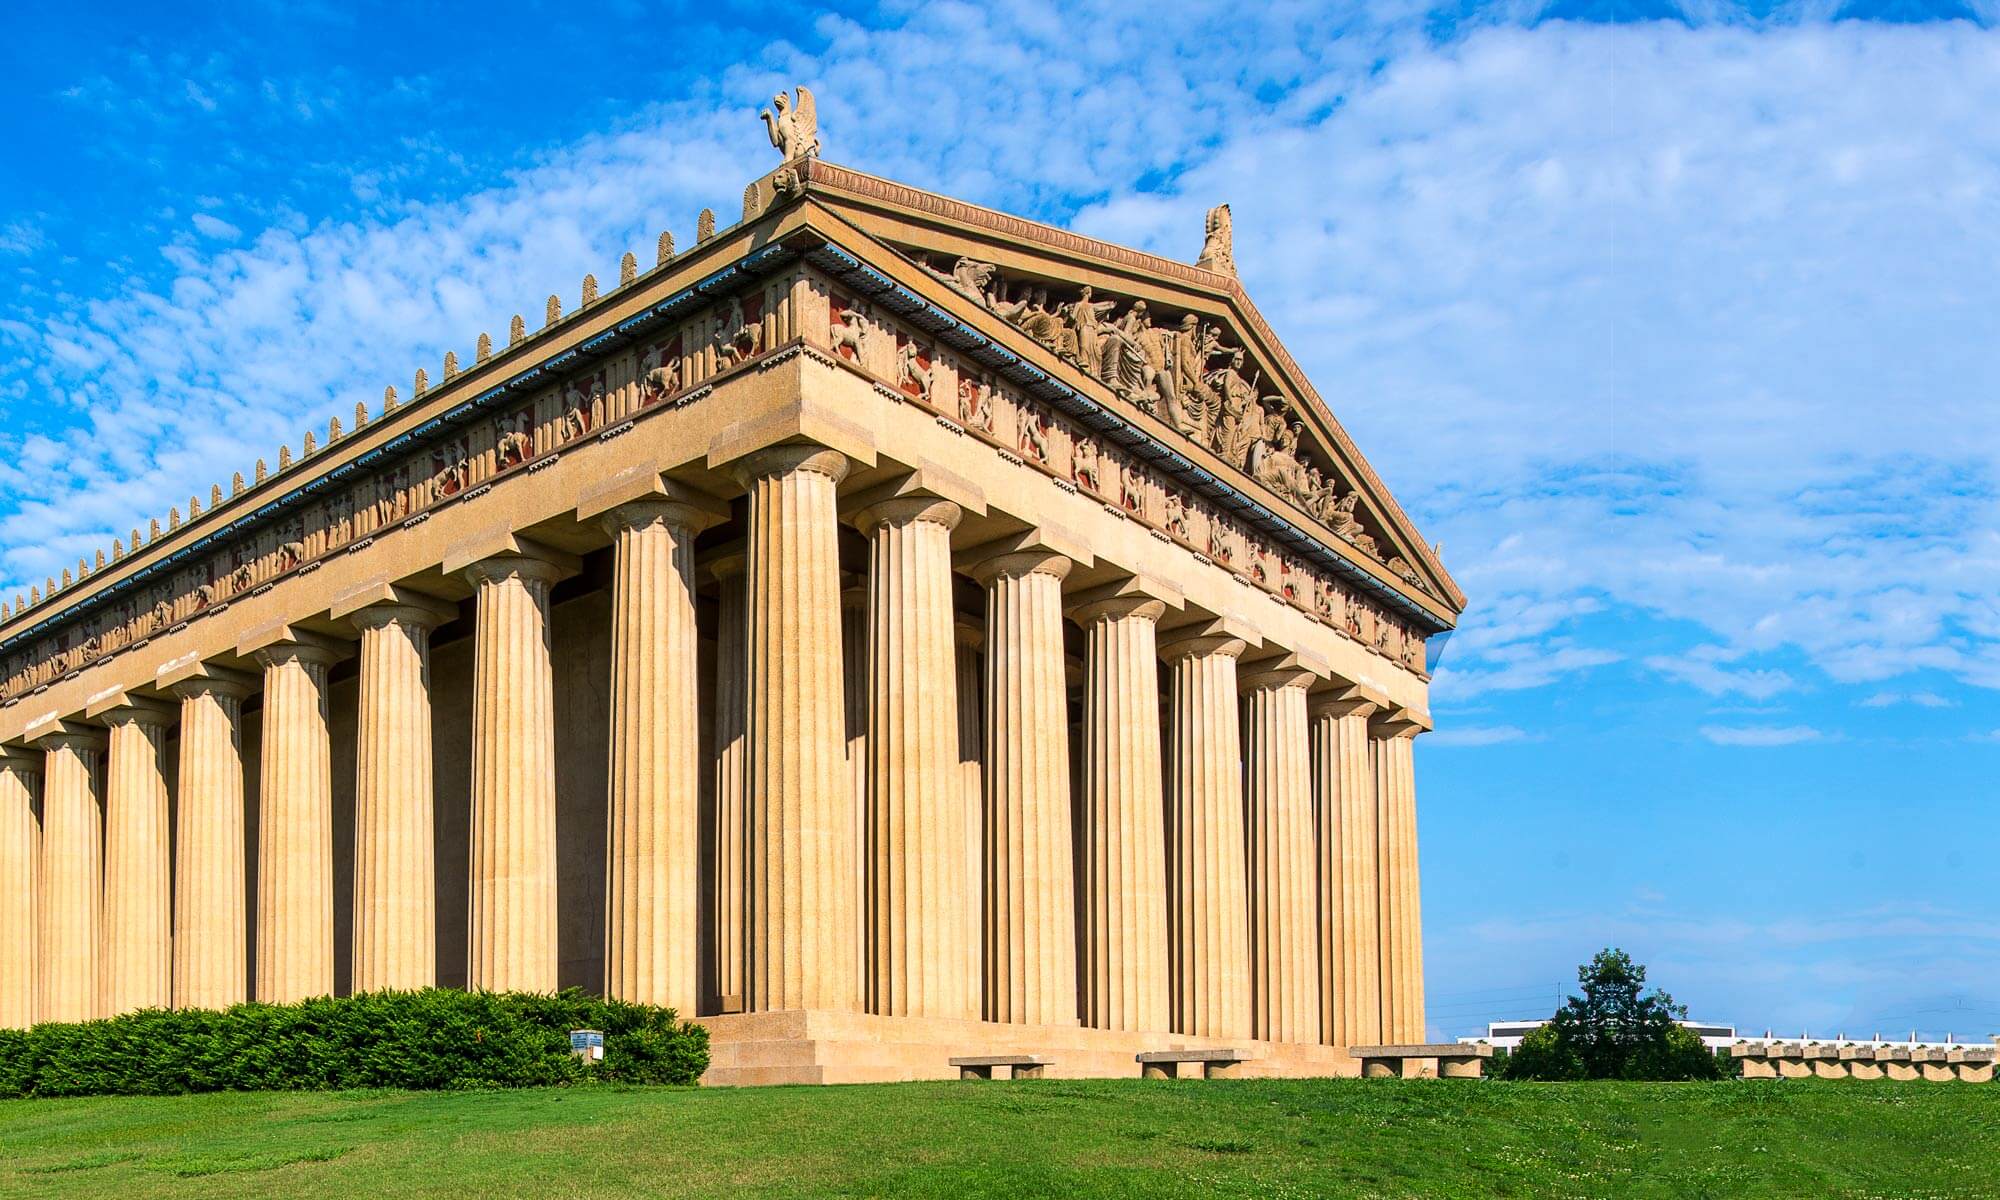 A full-scale replica of the Parthenon in Nashville's Centennial Park